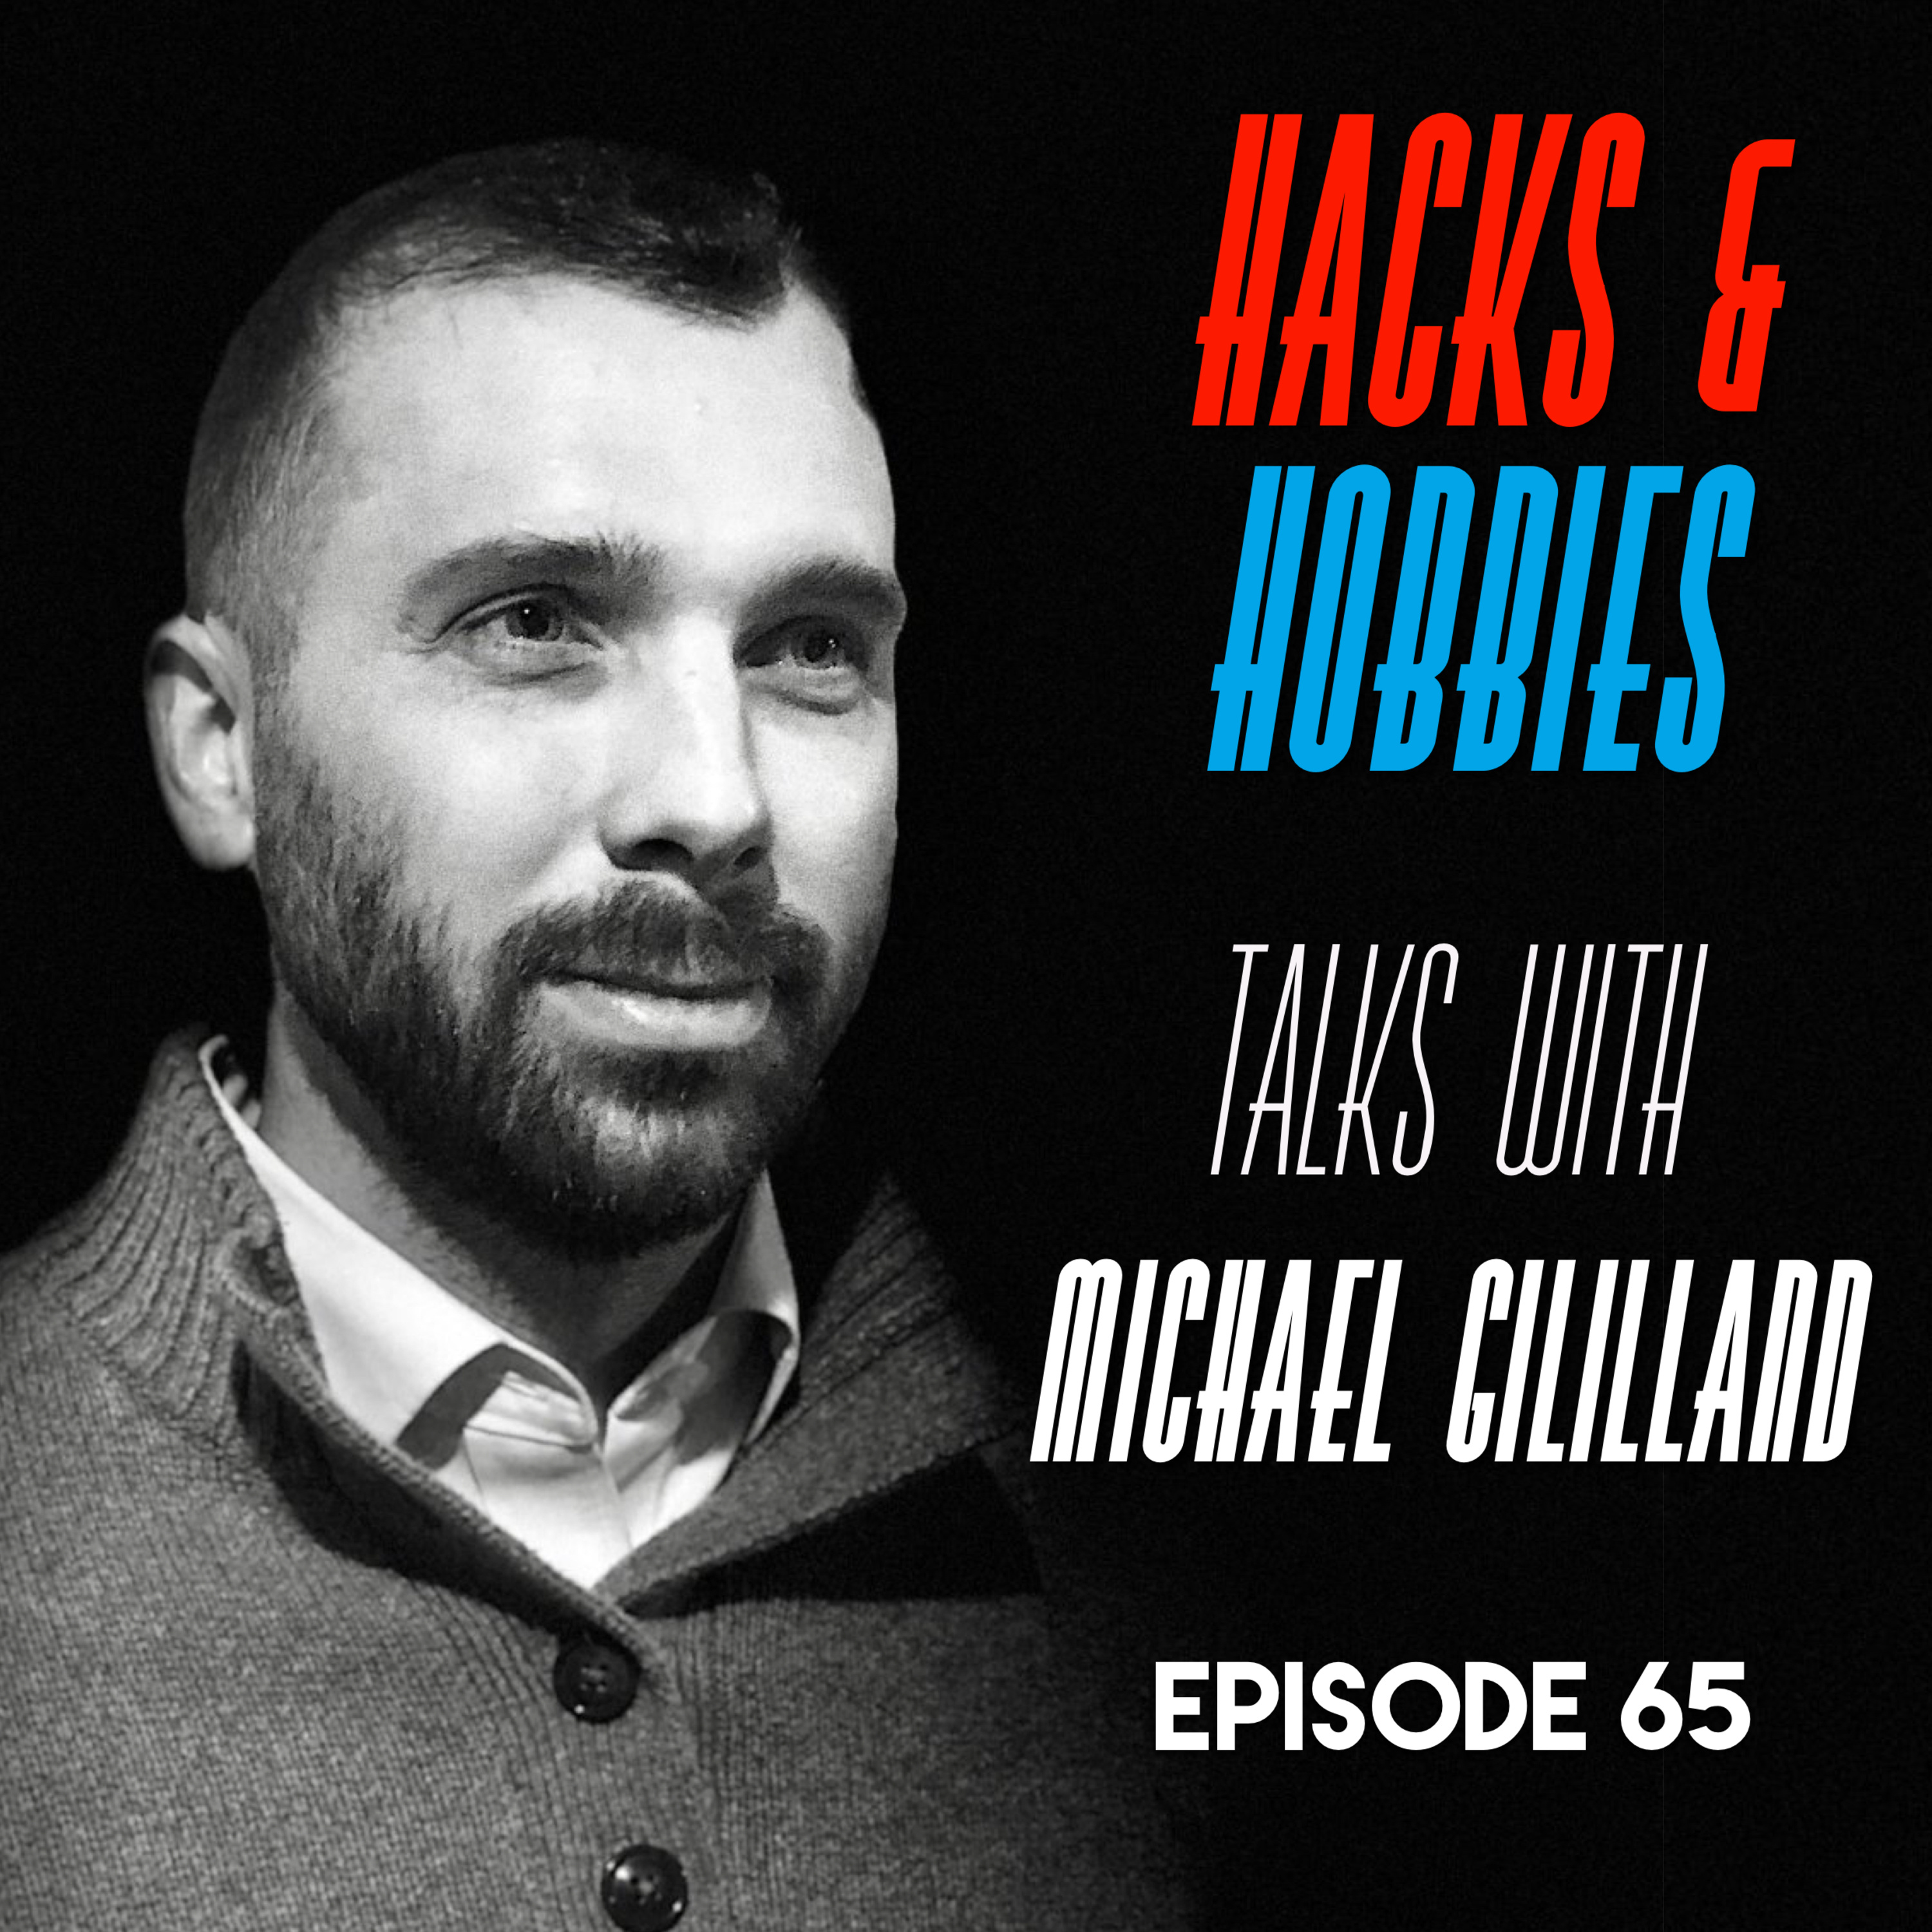 E165 – Michael Gililland – NotAverage podcast co-host